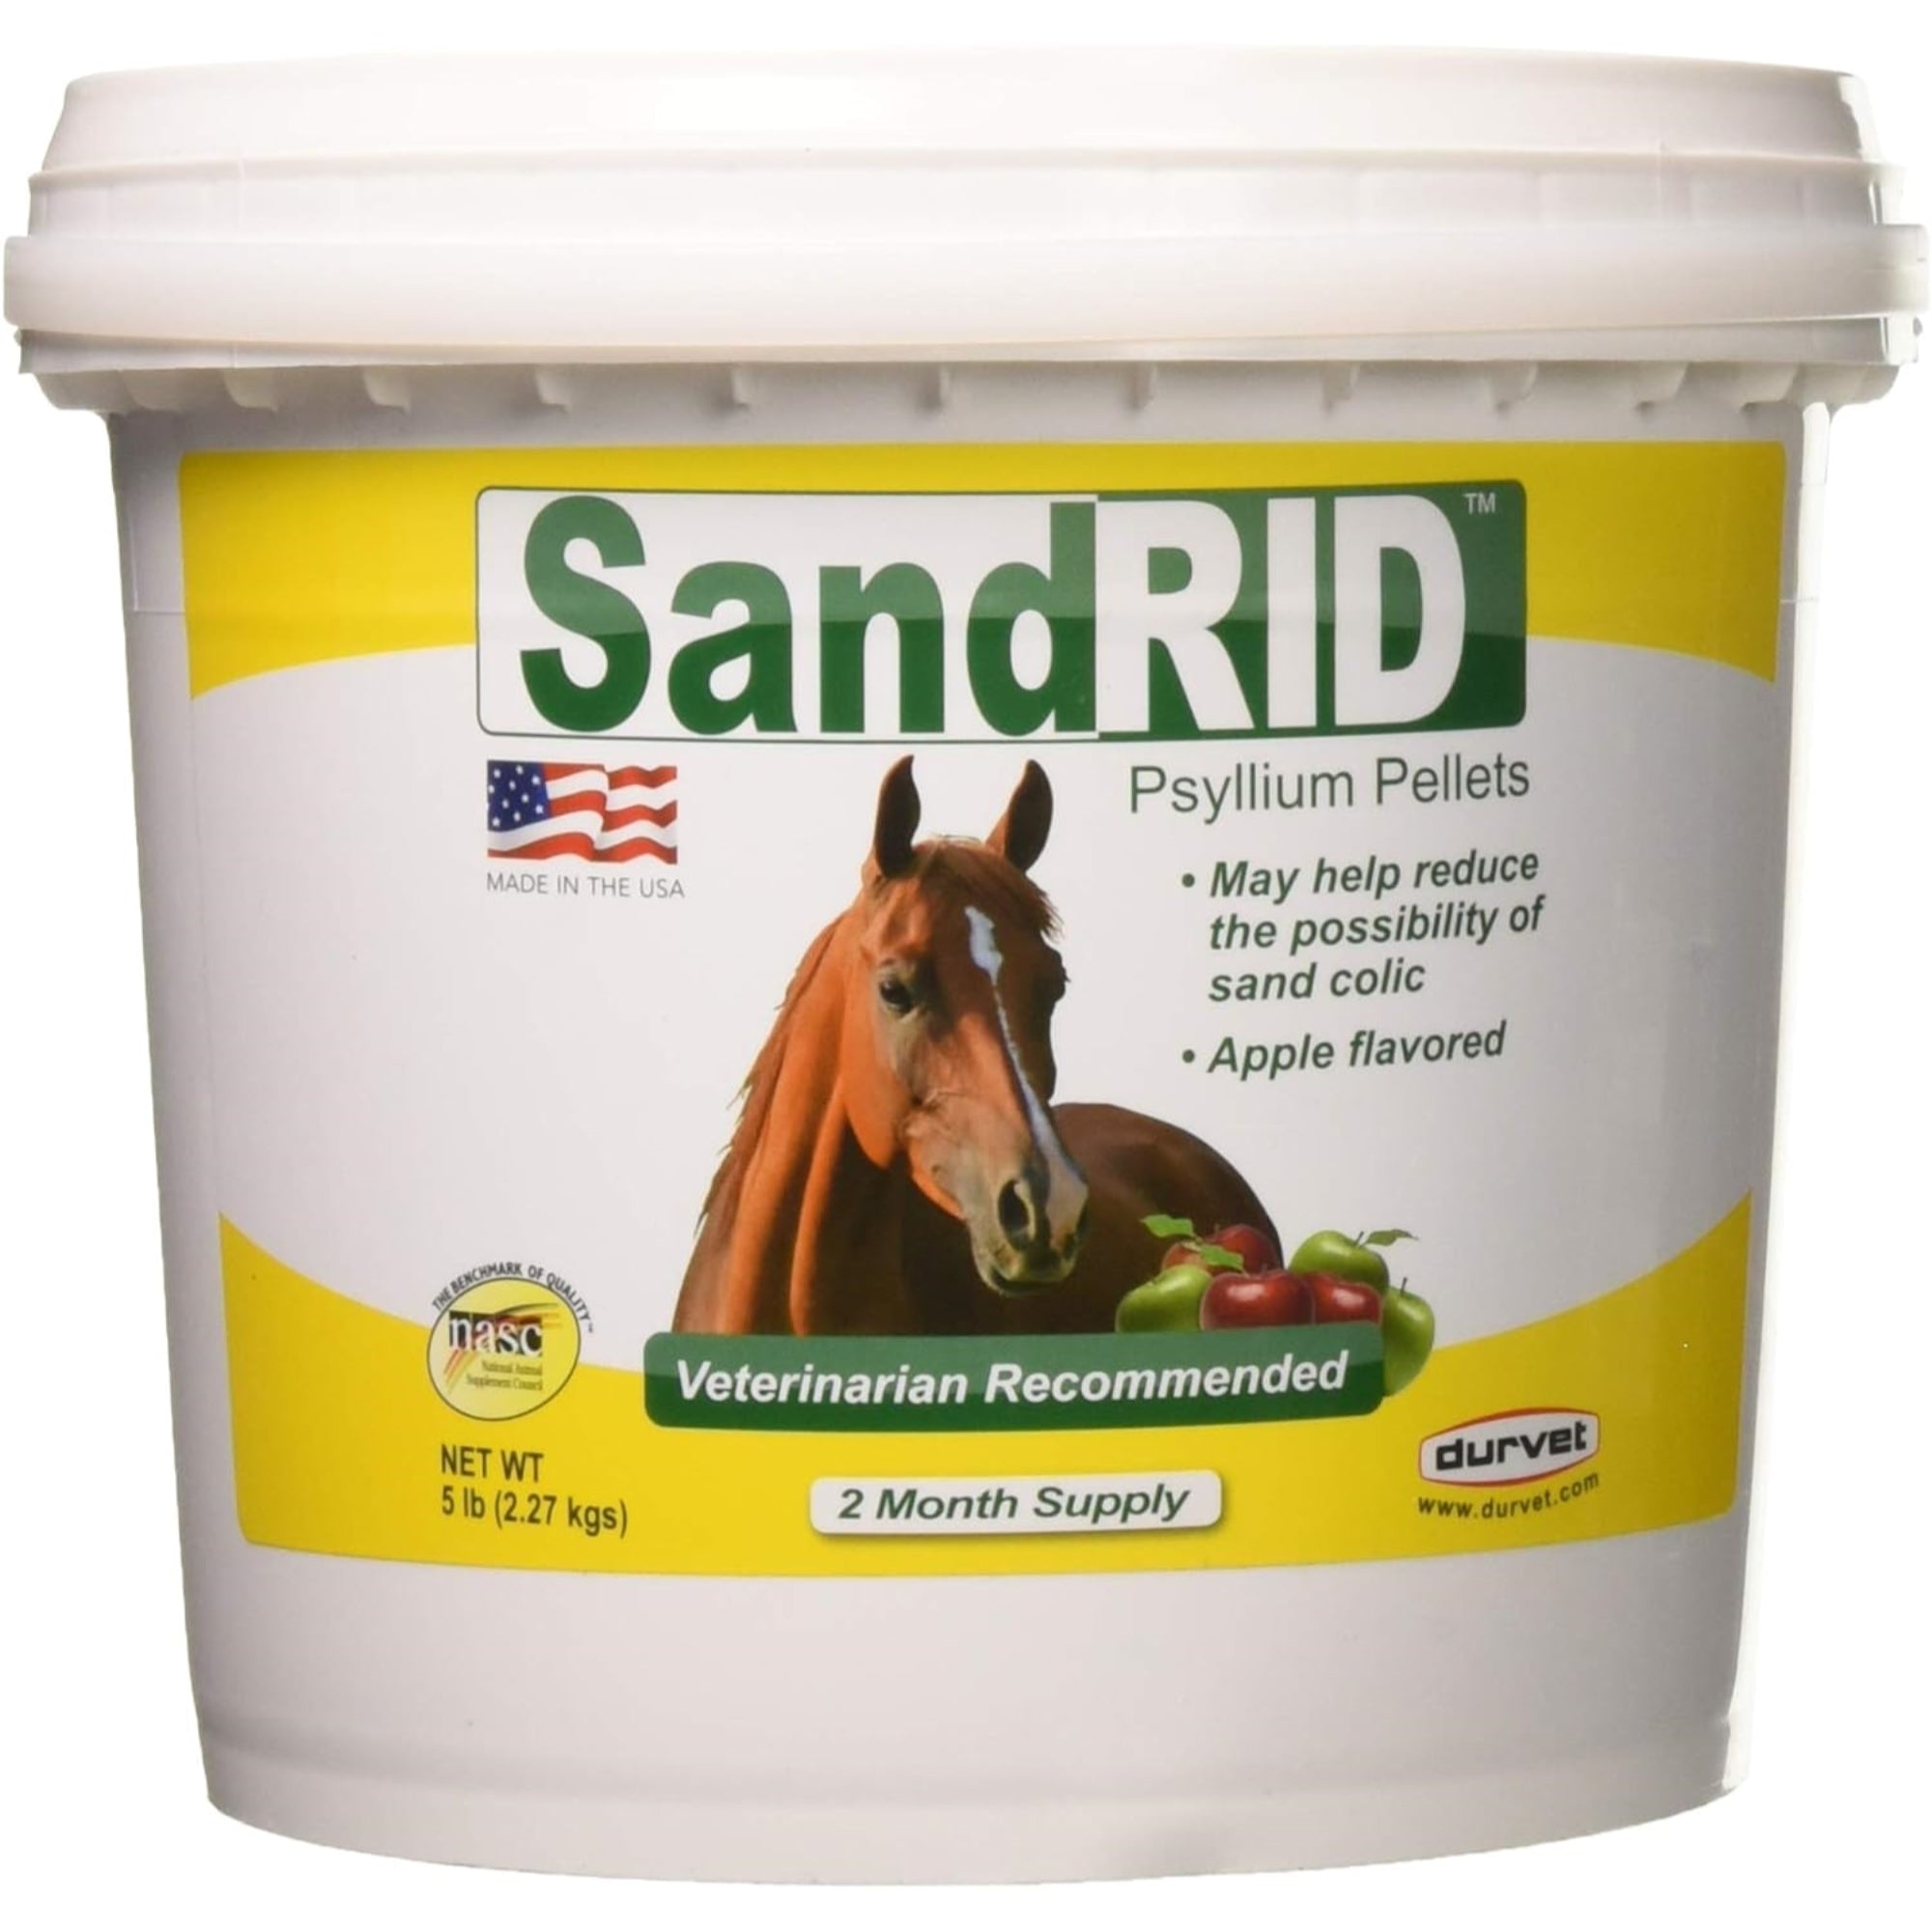 Durvet SandRID Psyllium Pellets for Horses, Apple Flavored, 5lb Pail